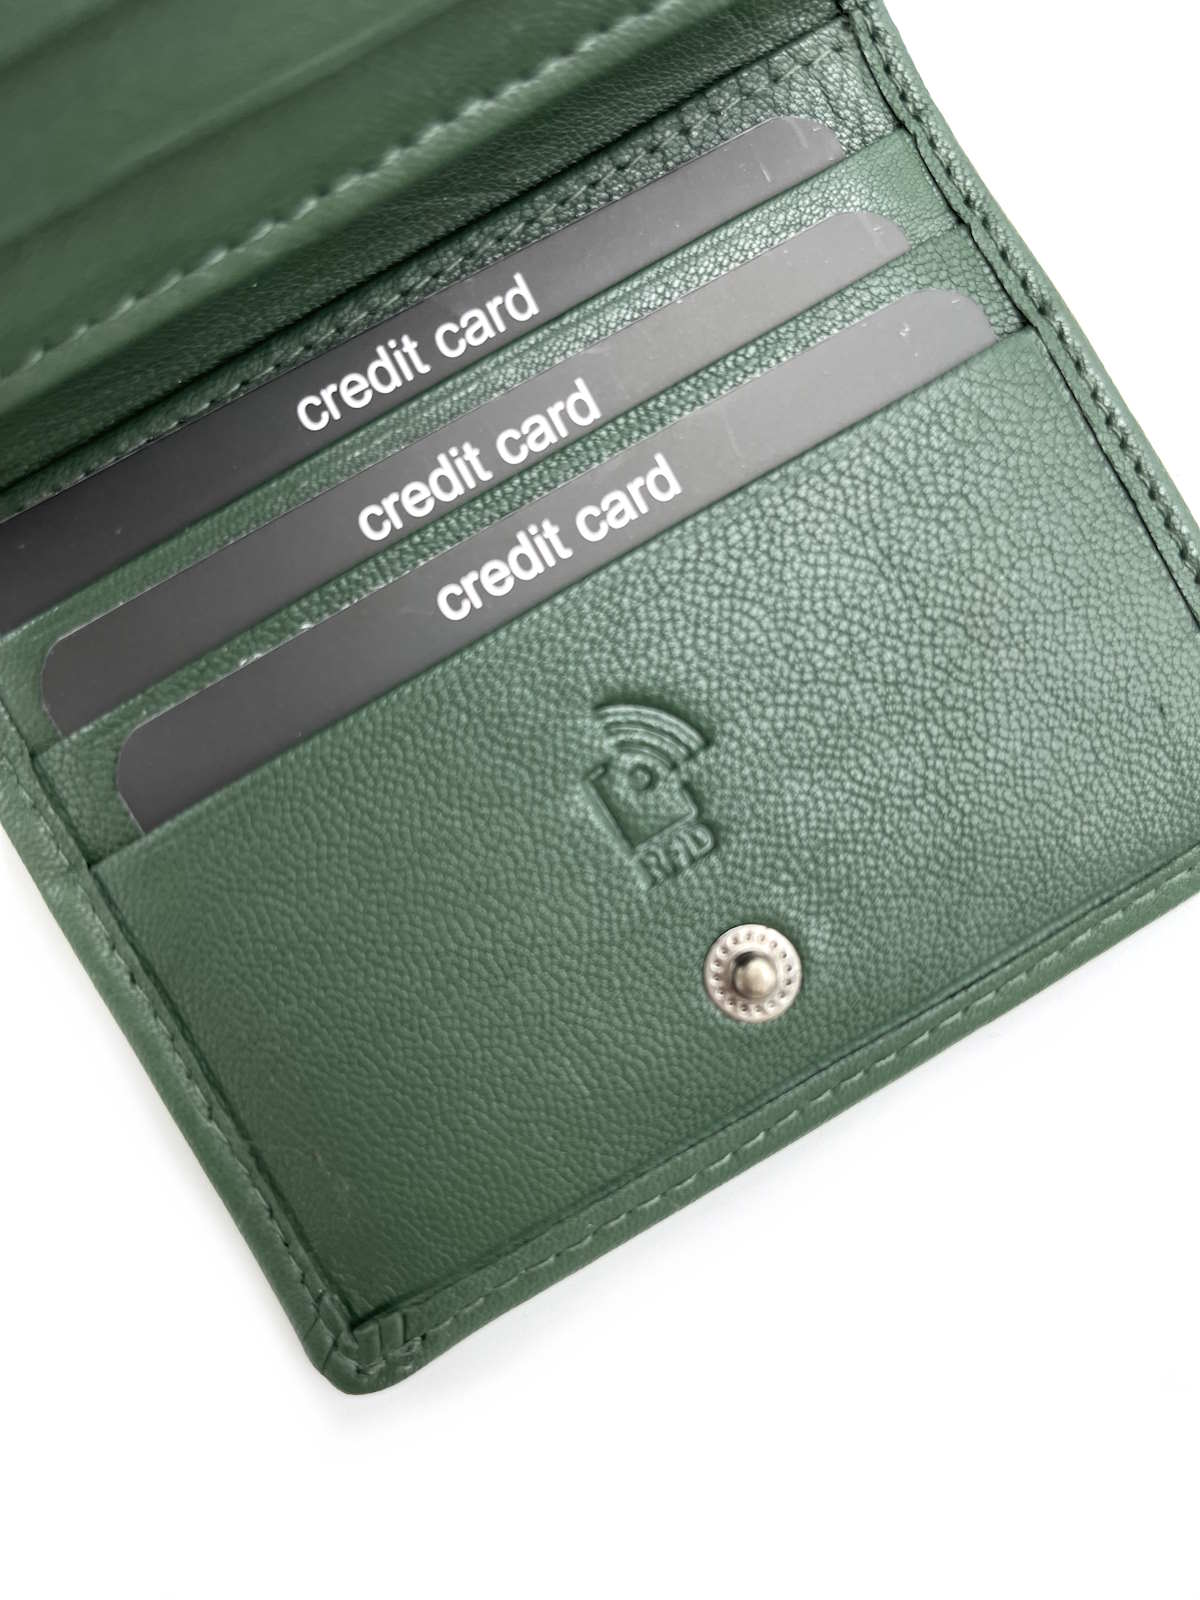 Genuine leather wallet, Brand EC COVERI, art. EC23760-45